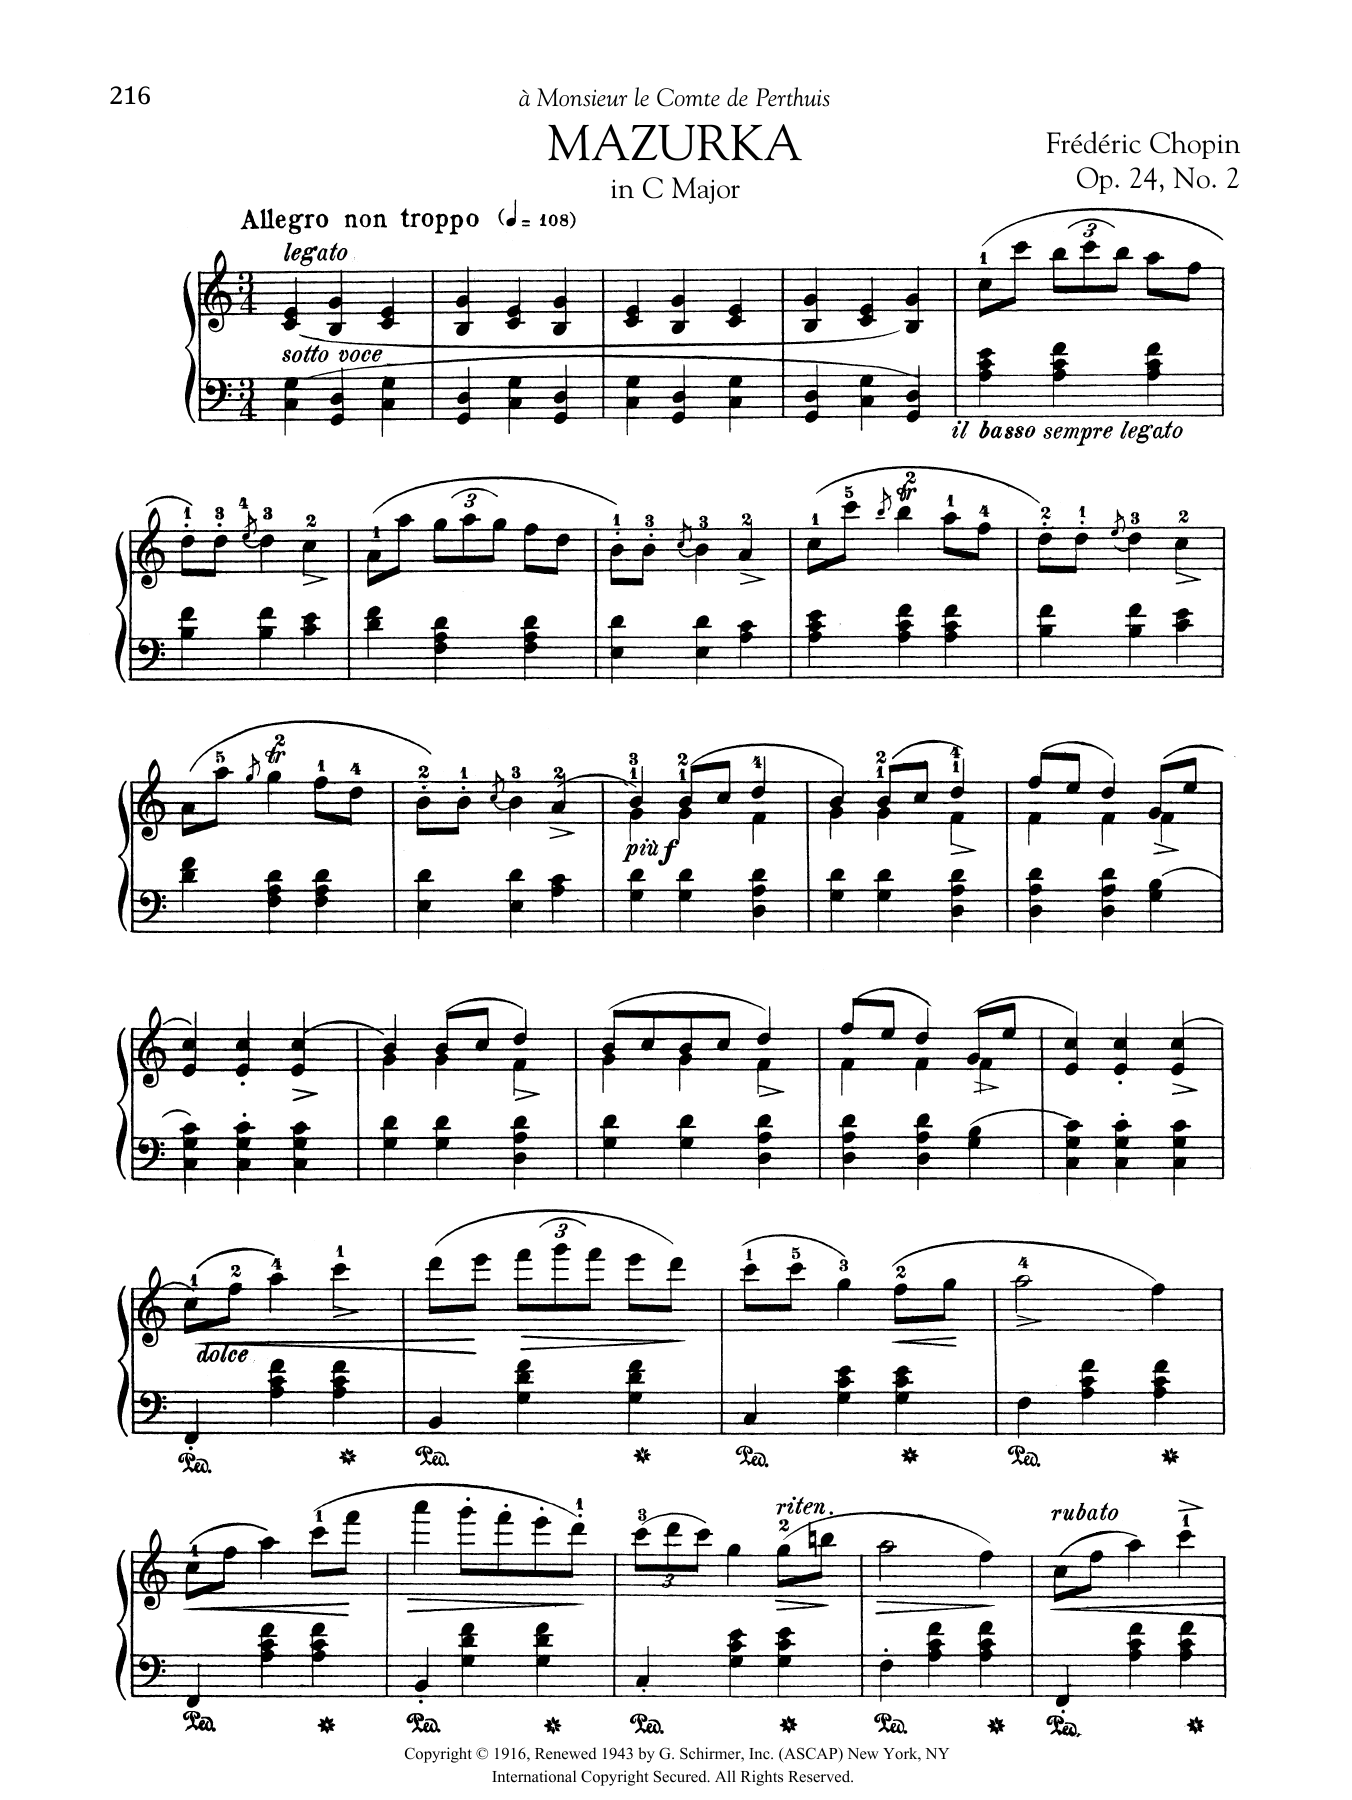 Mazurka in C Major, Op. 24, No. 2 sheet music